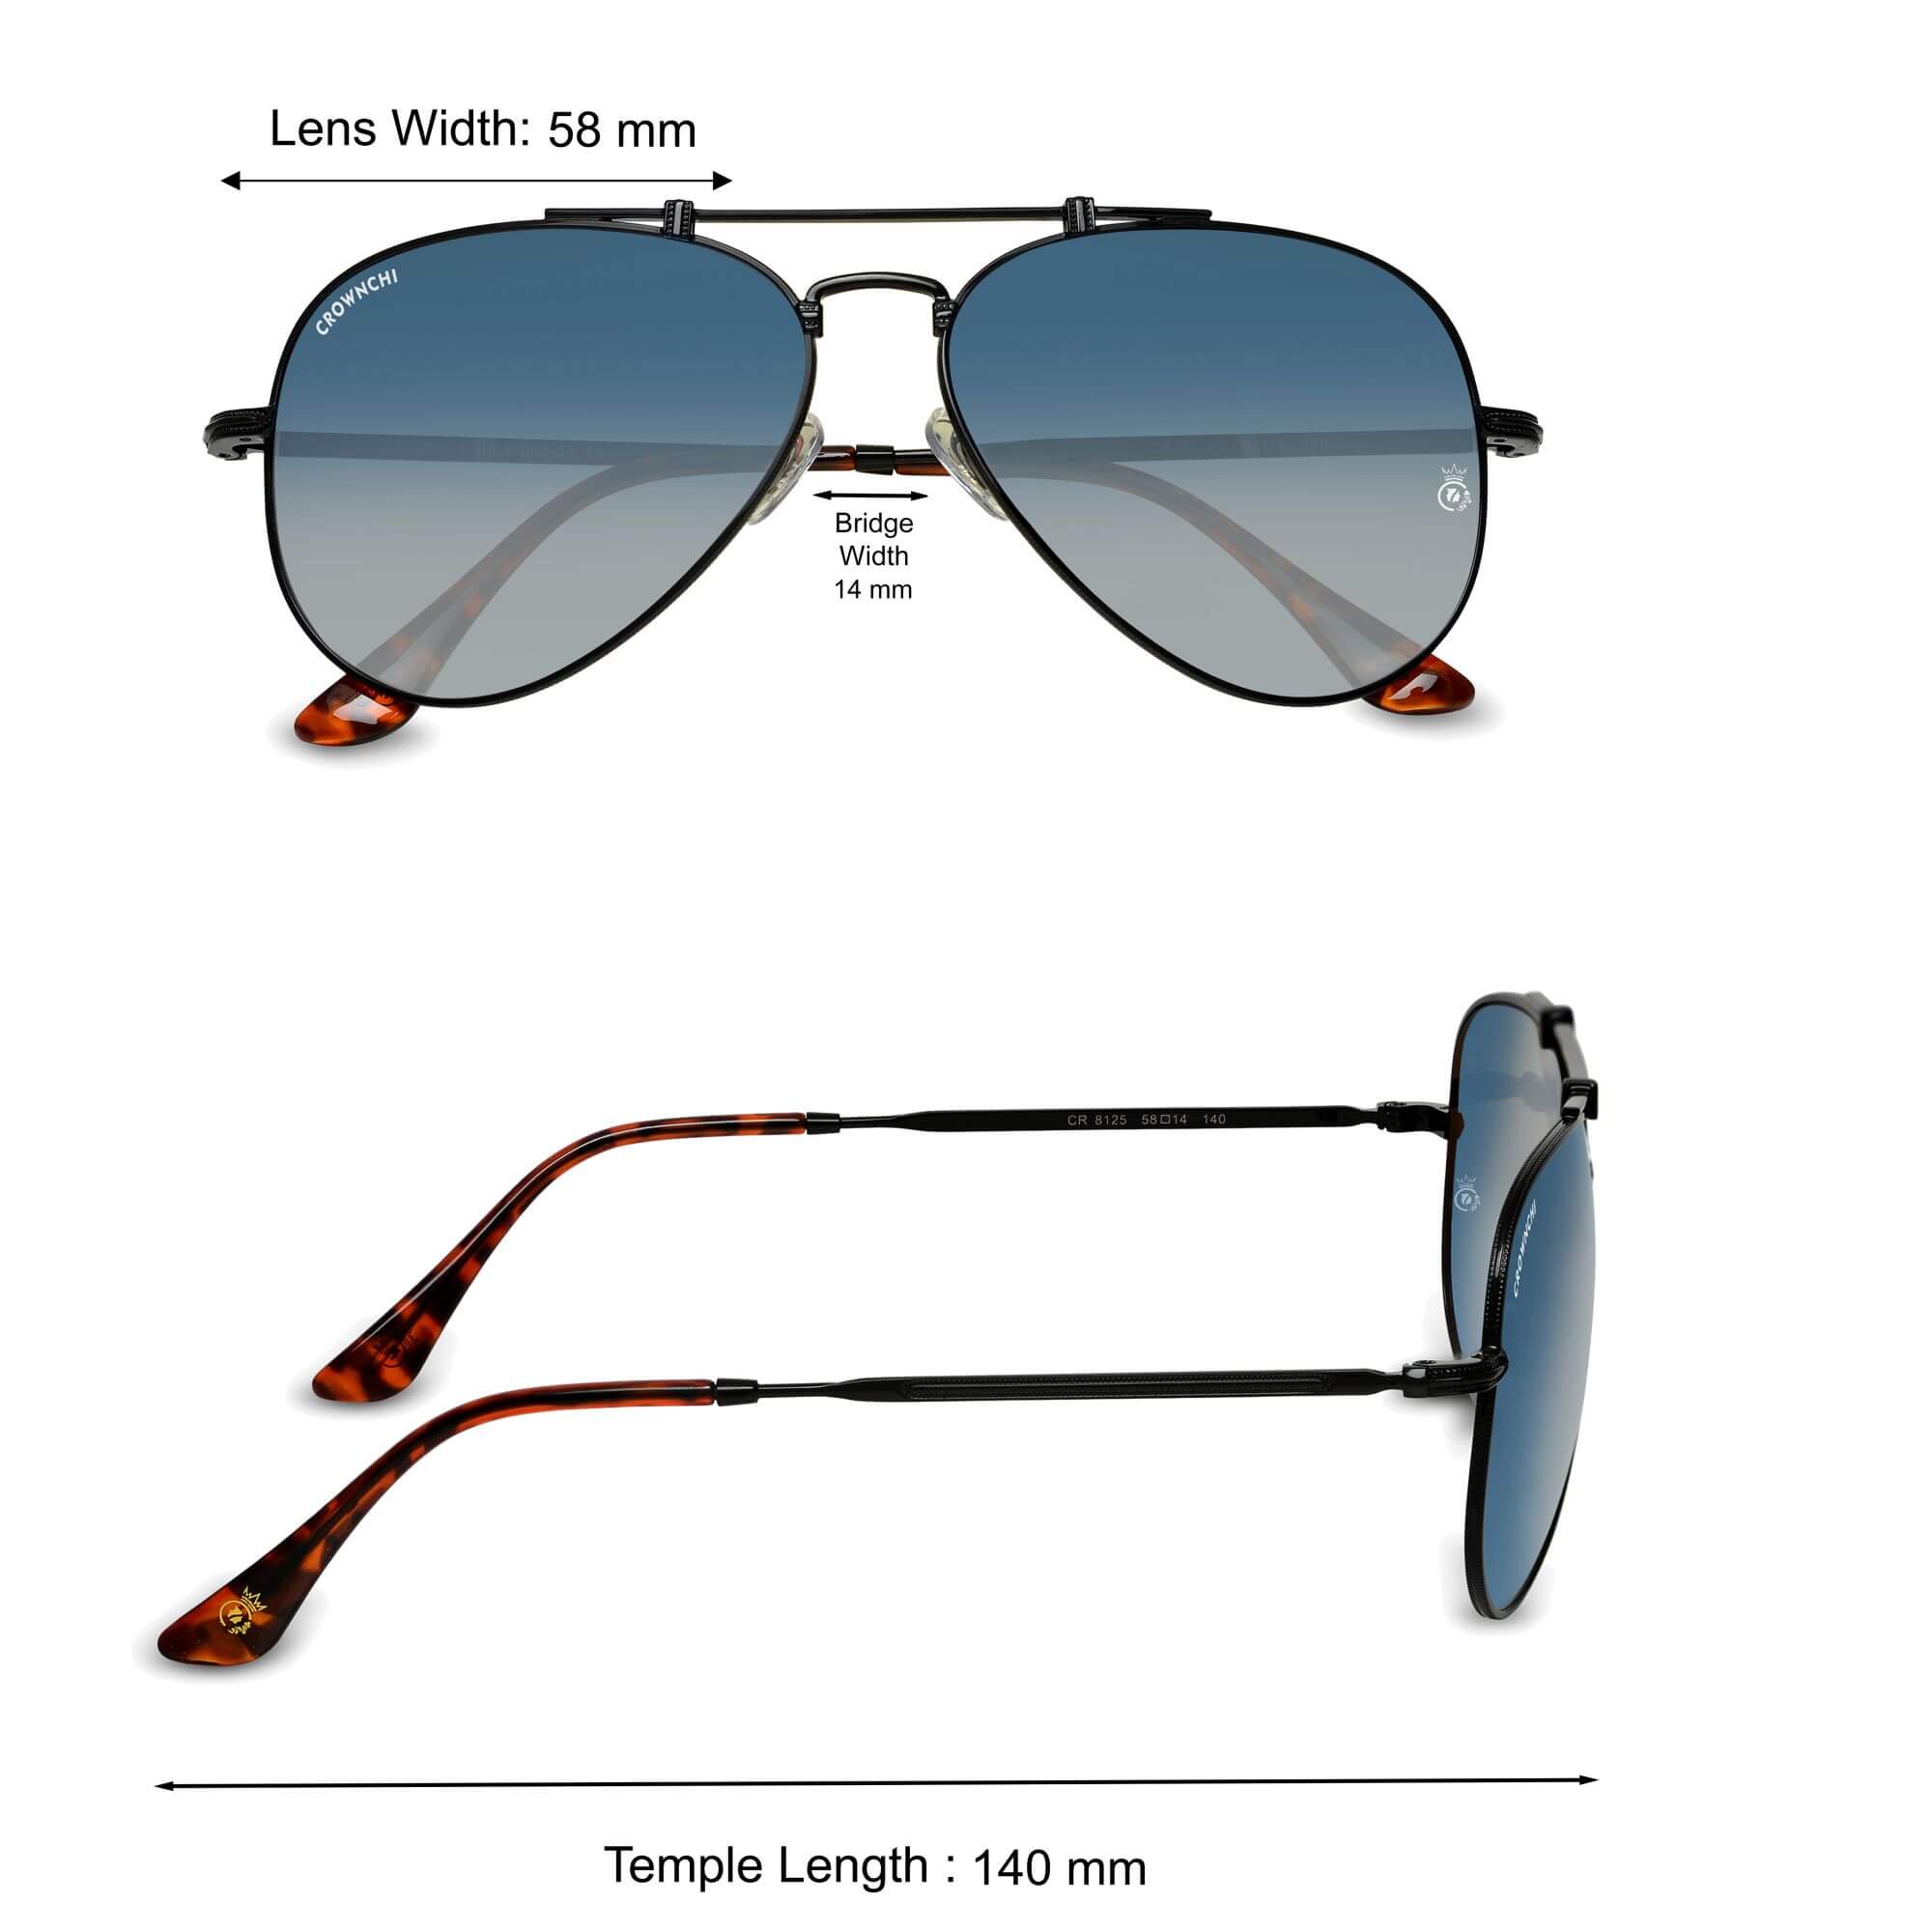 Wingman Black Blue Gradient Pilot Edition Sunglasses